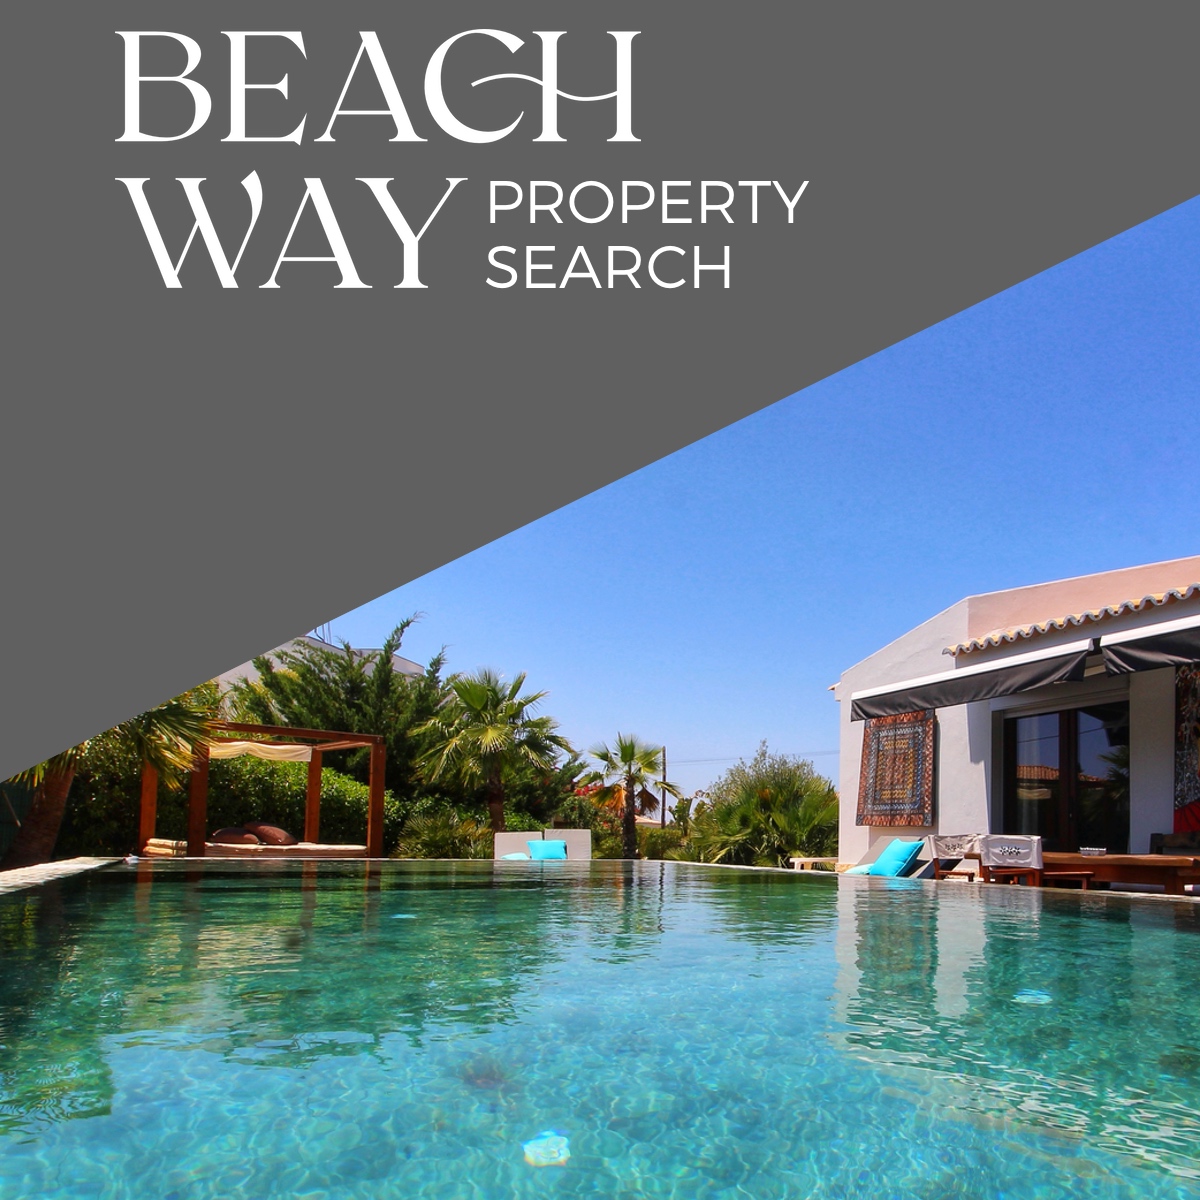 Beach Way Property Search